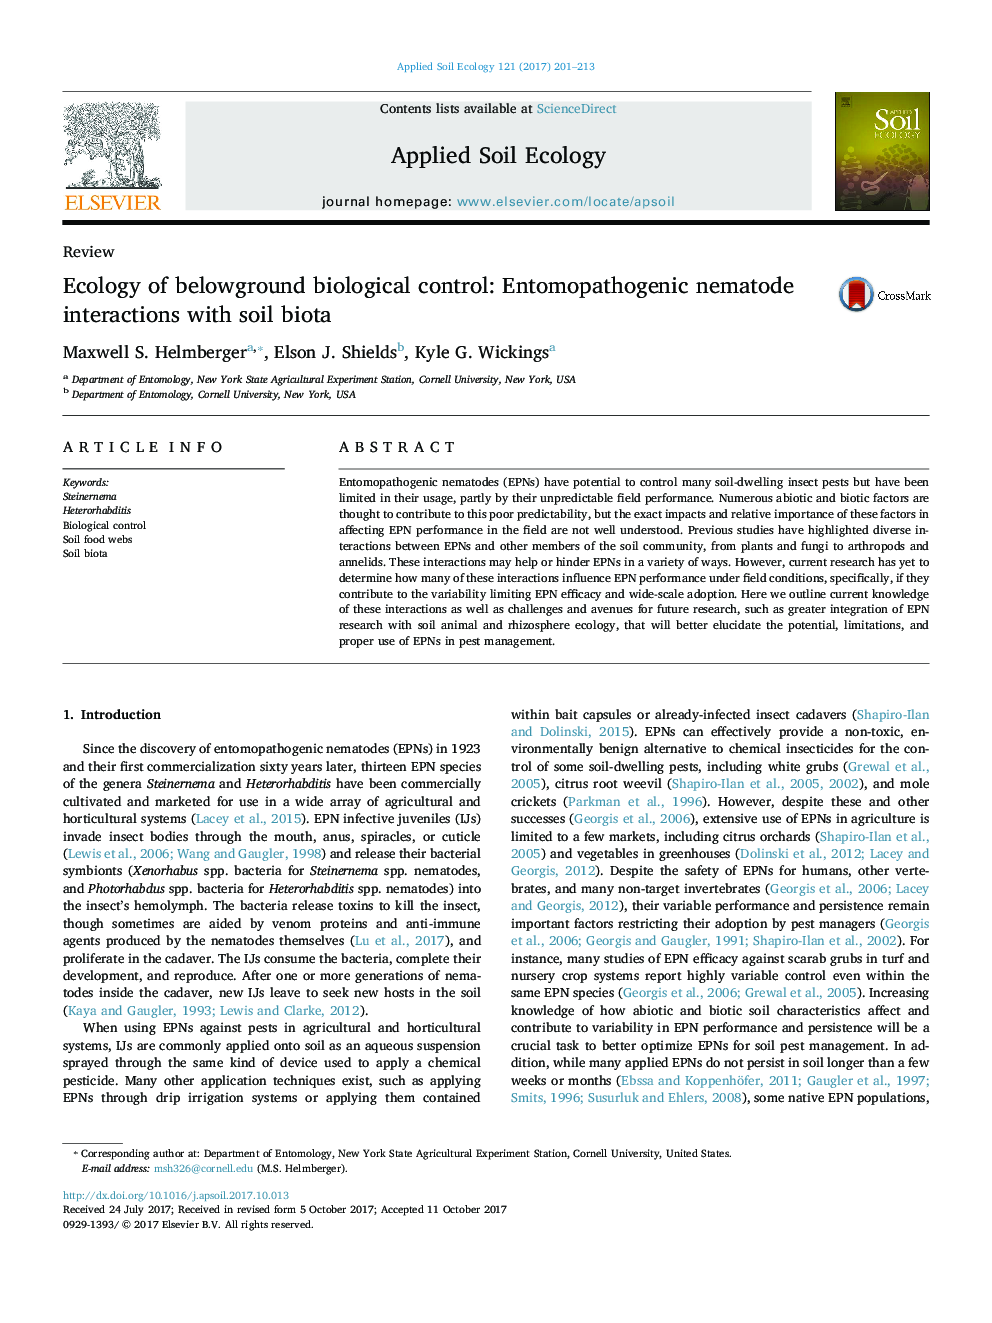 Ecology of belowground biological control: Entomopathogenic nematode interactions with soil biota